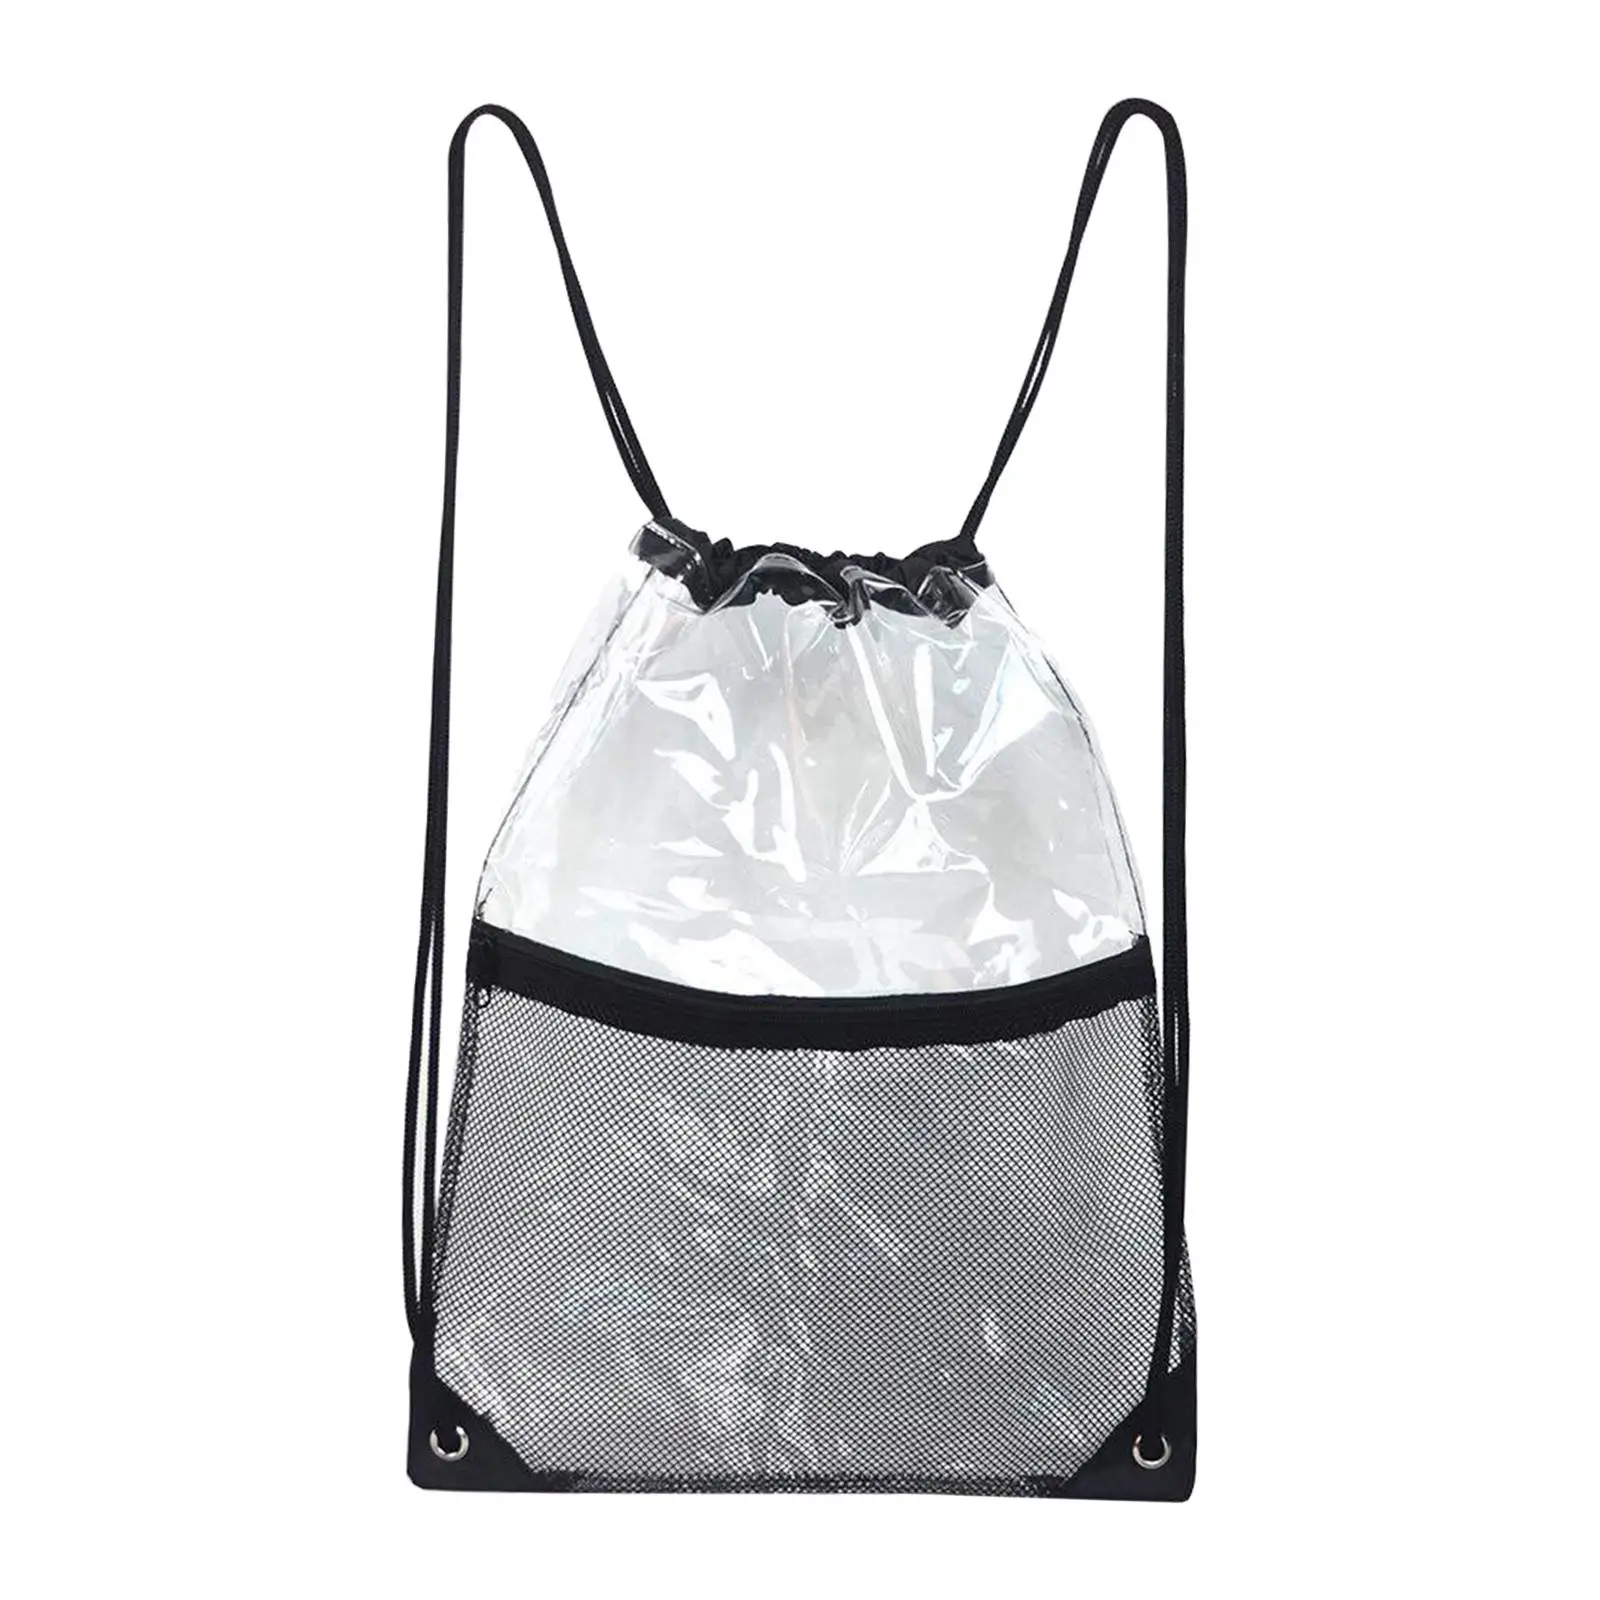 Clear Drawstring Backbag Waterproof Lightweight Portable Clear Bag Gym Sports Sackpacks for Yoga Sports Travel Gym Men Women